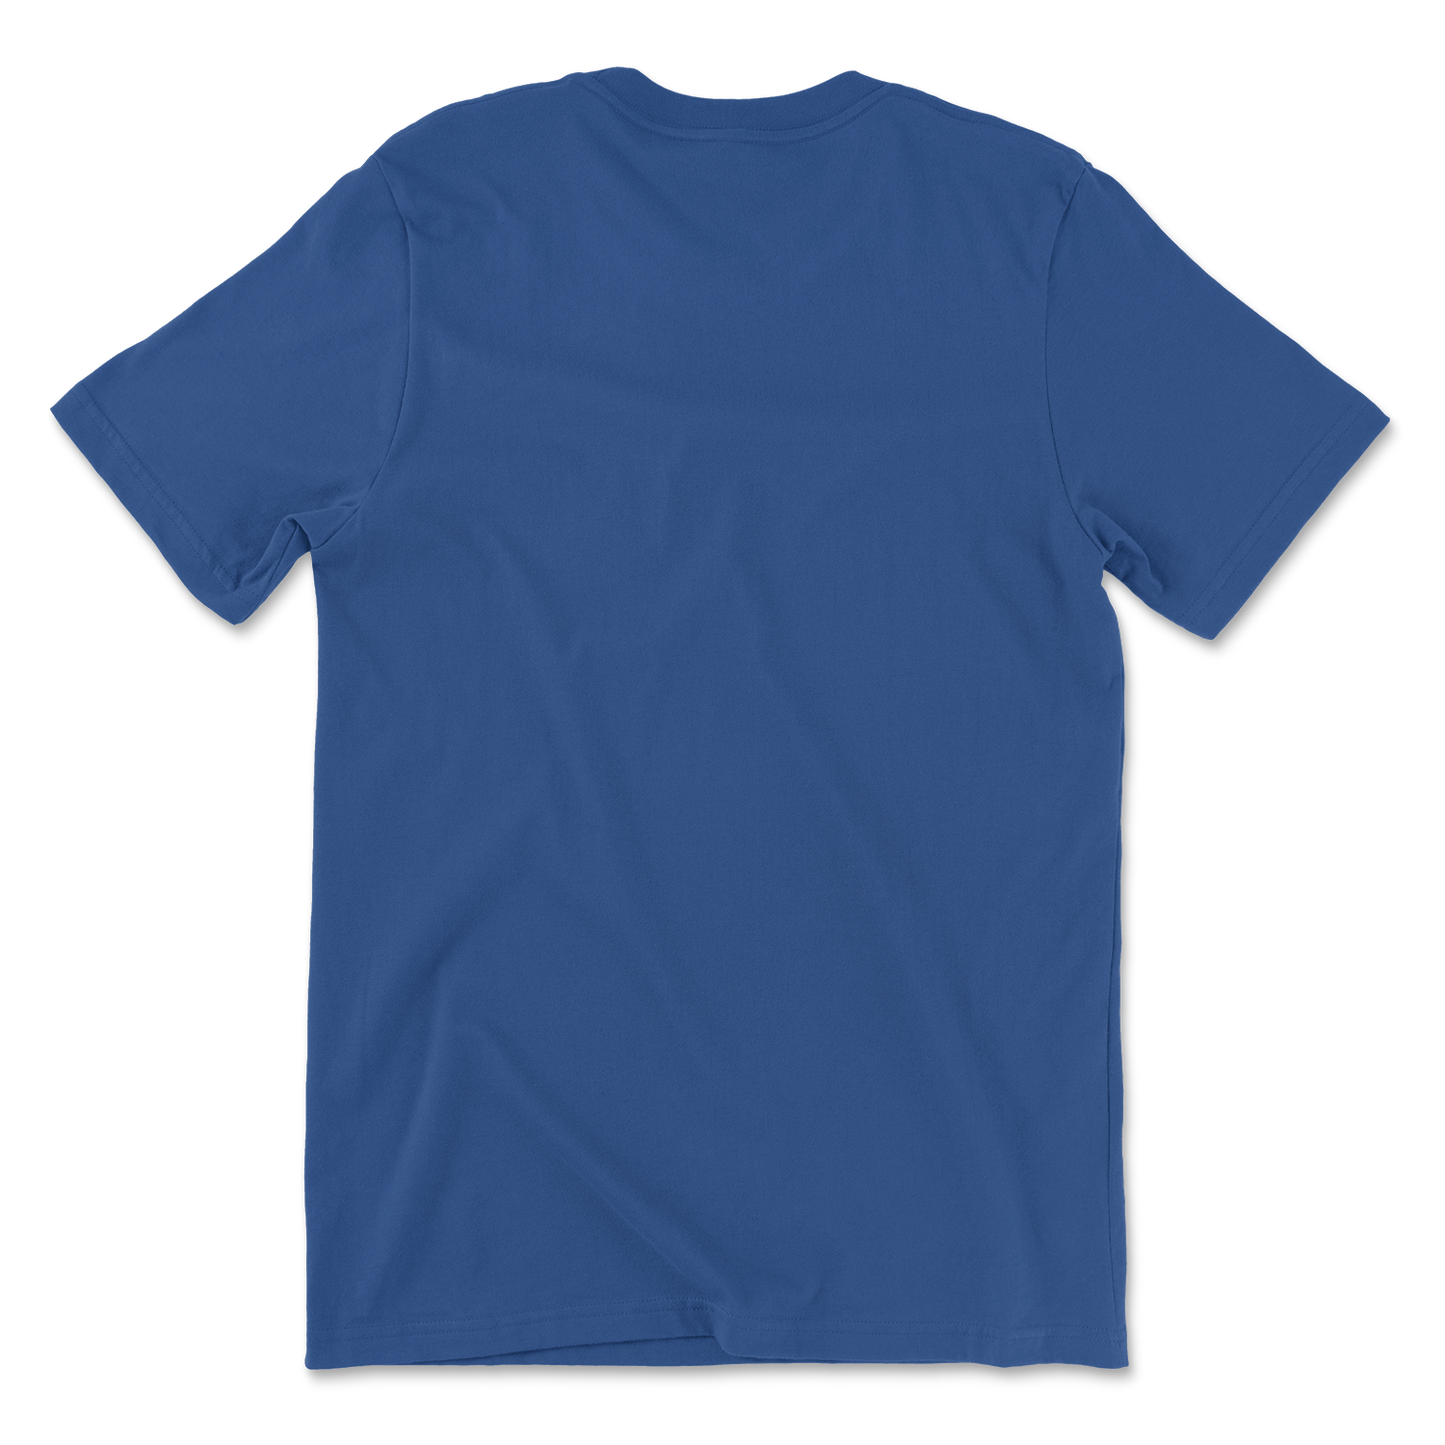 Unisex True Royal T-Shirt w/Same Apparel pride logo